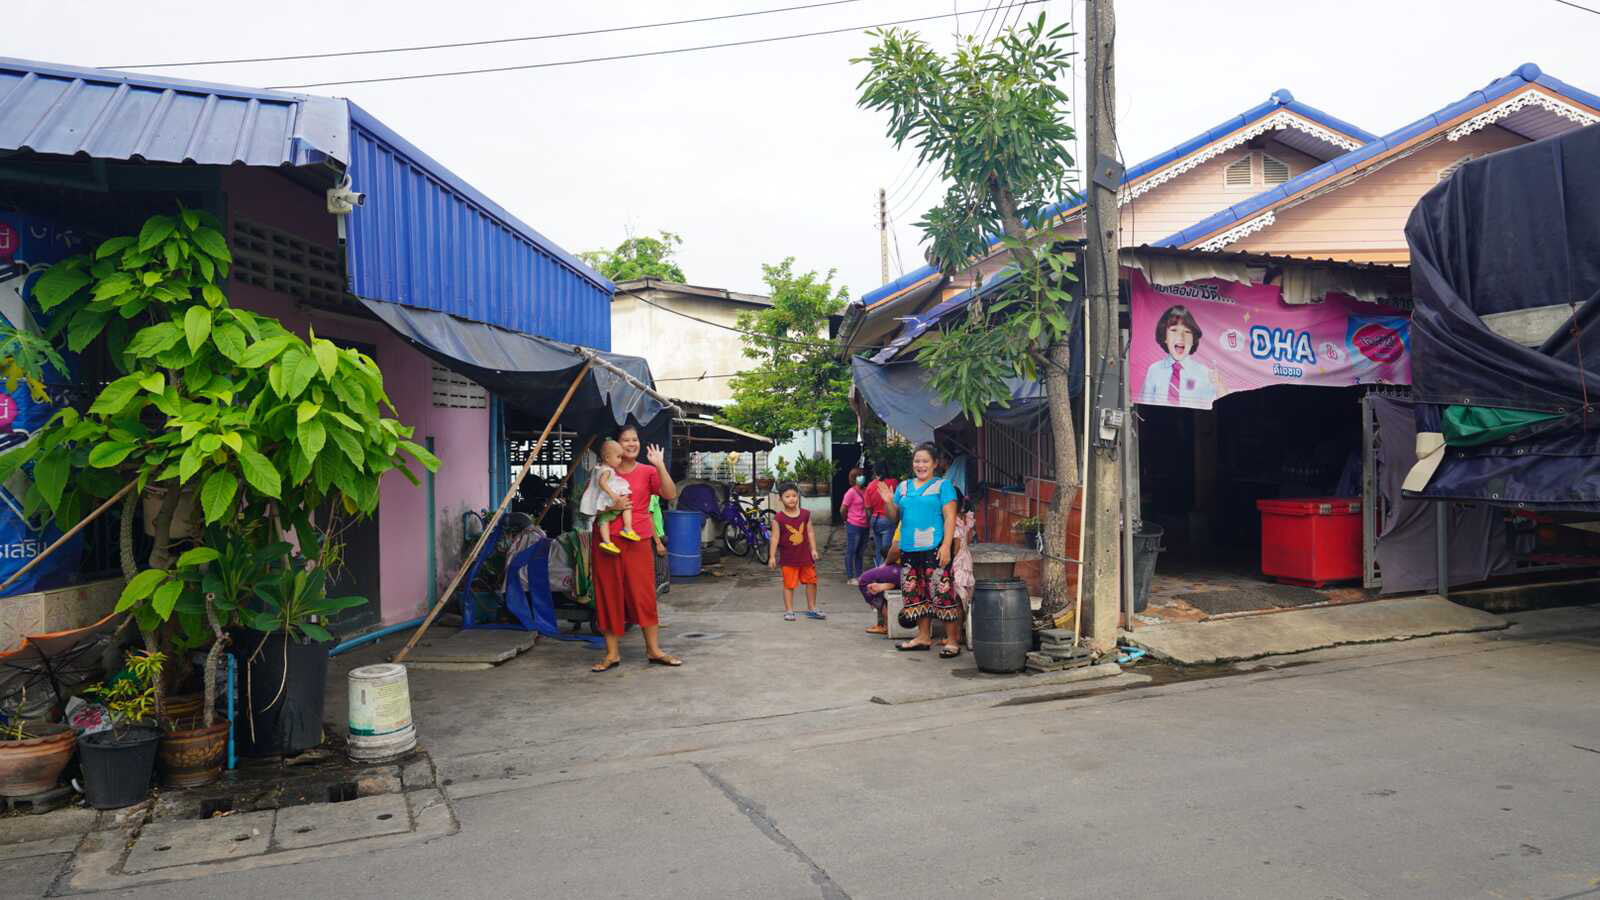 Burmese migrants in Thailand wave on a street corner